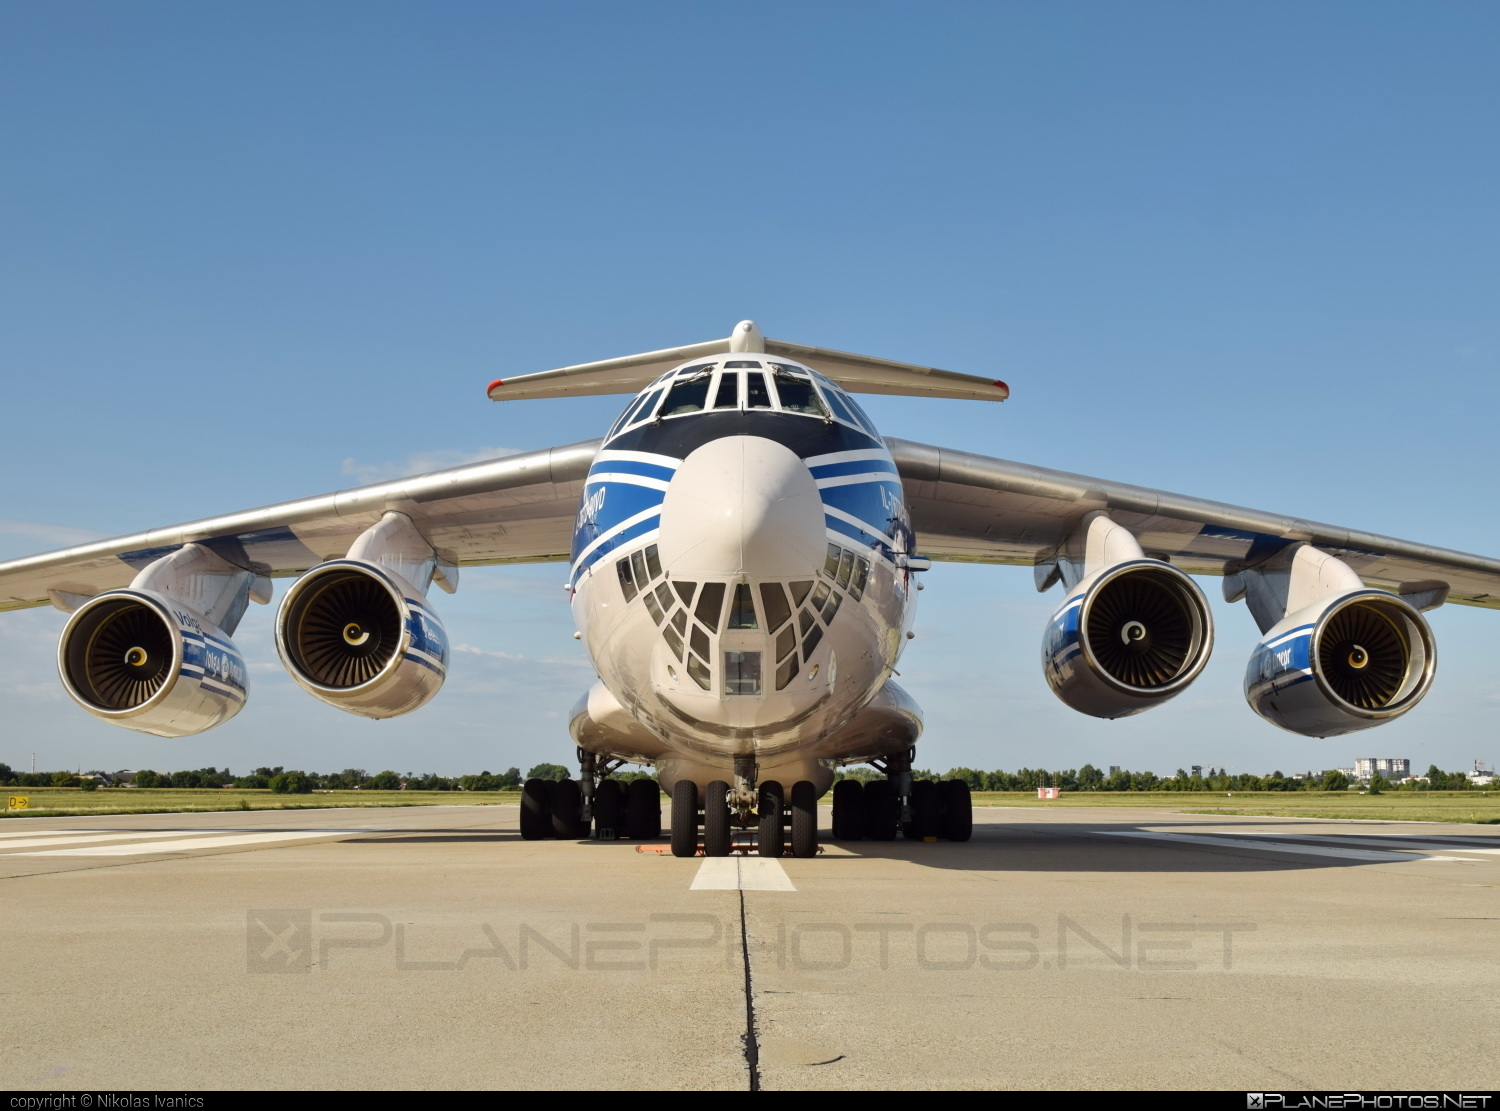 Ilyushin Il-76TD-90VD - RA-76952 operated by Volga Dnepr Airlines (HeavyLift Cargo Airlines) #il76 #il76td90vd #ilyushin